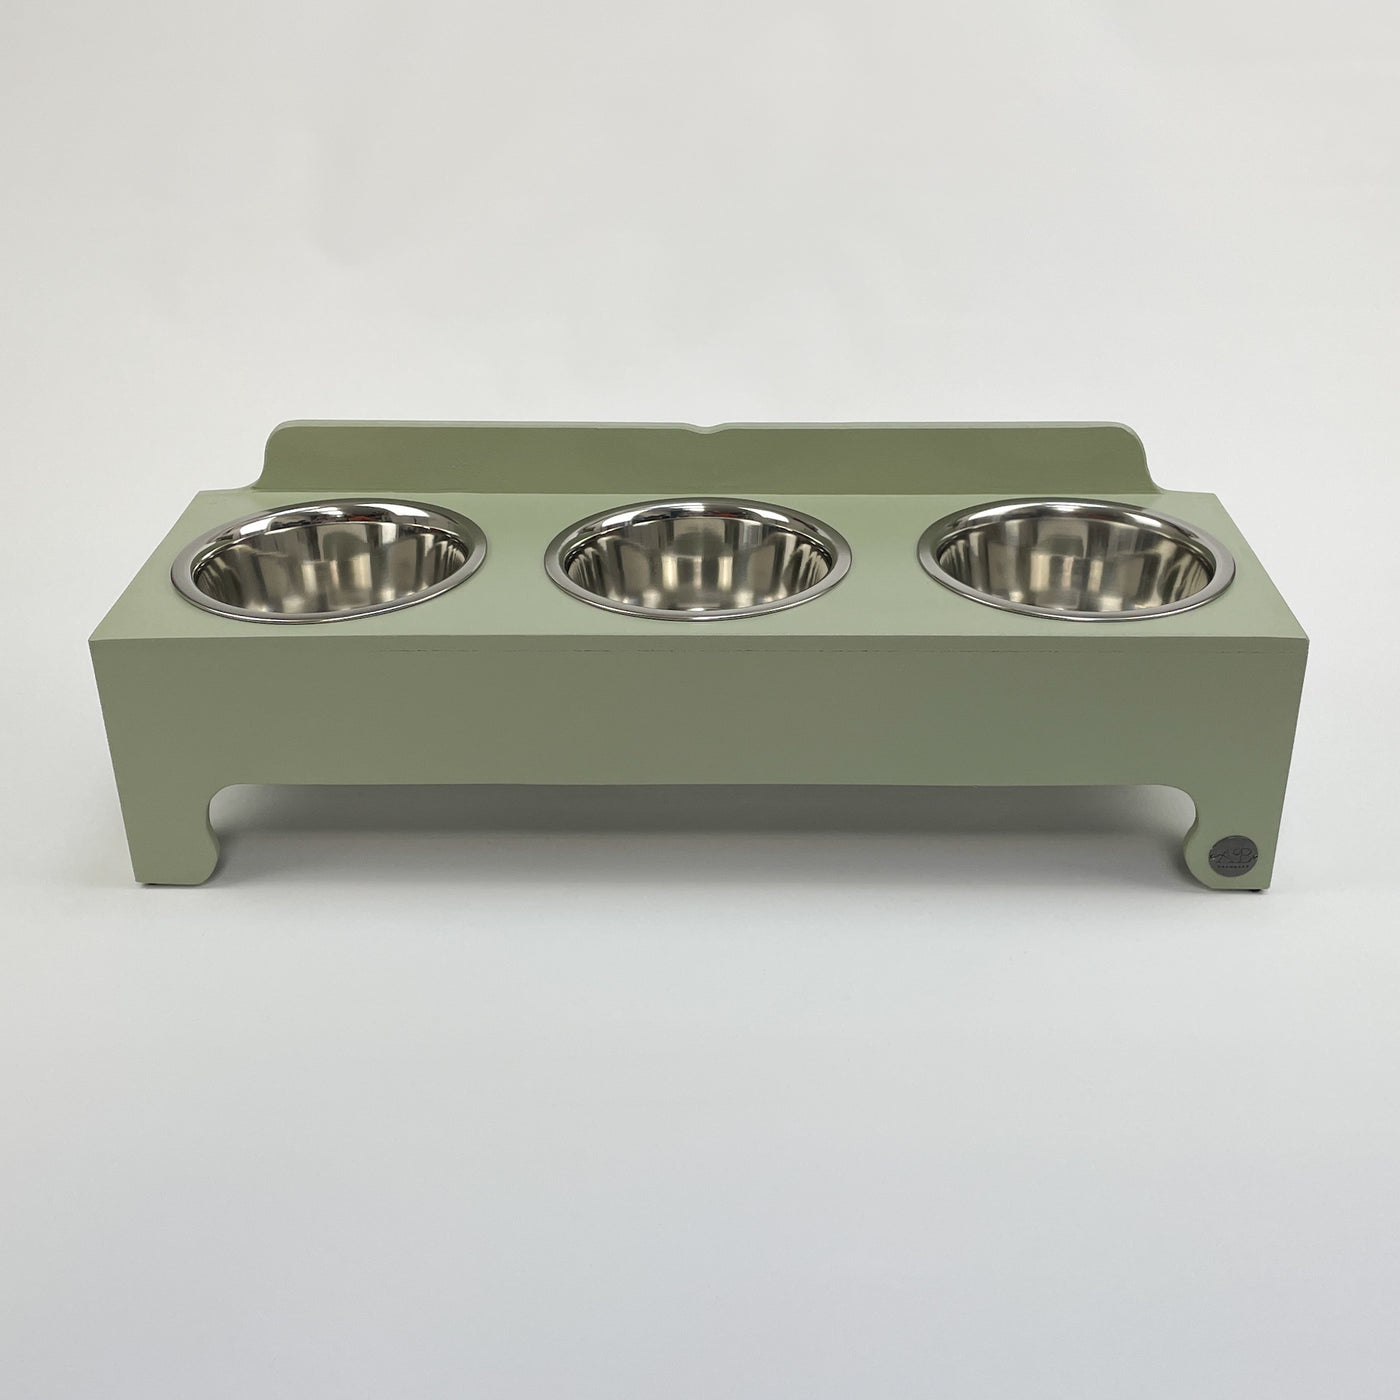 Three-bowl raised dog feeding stand in soft green.